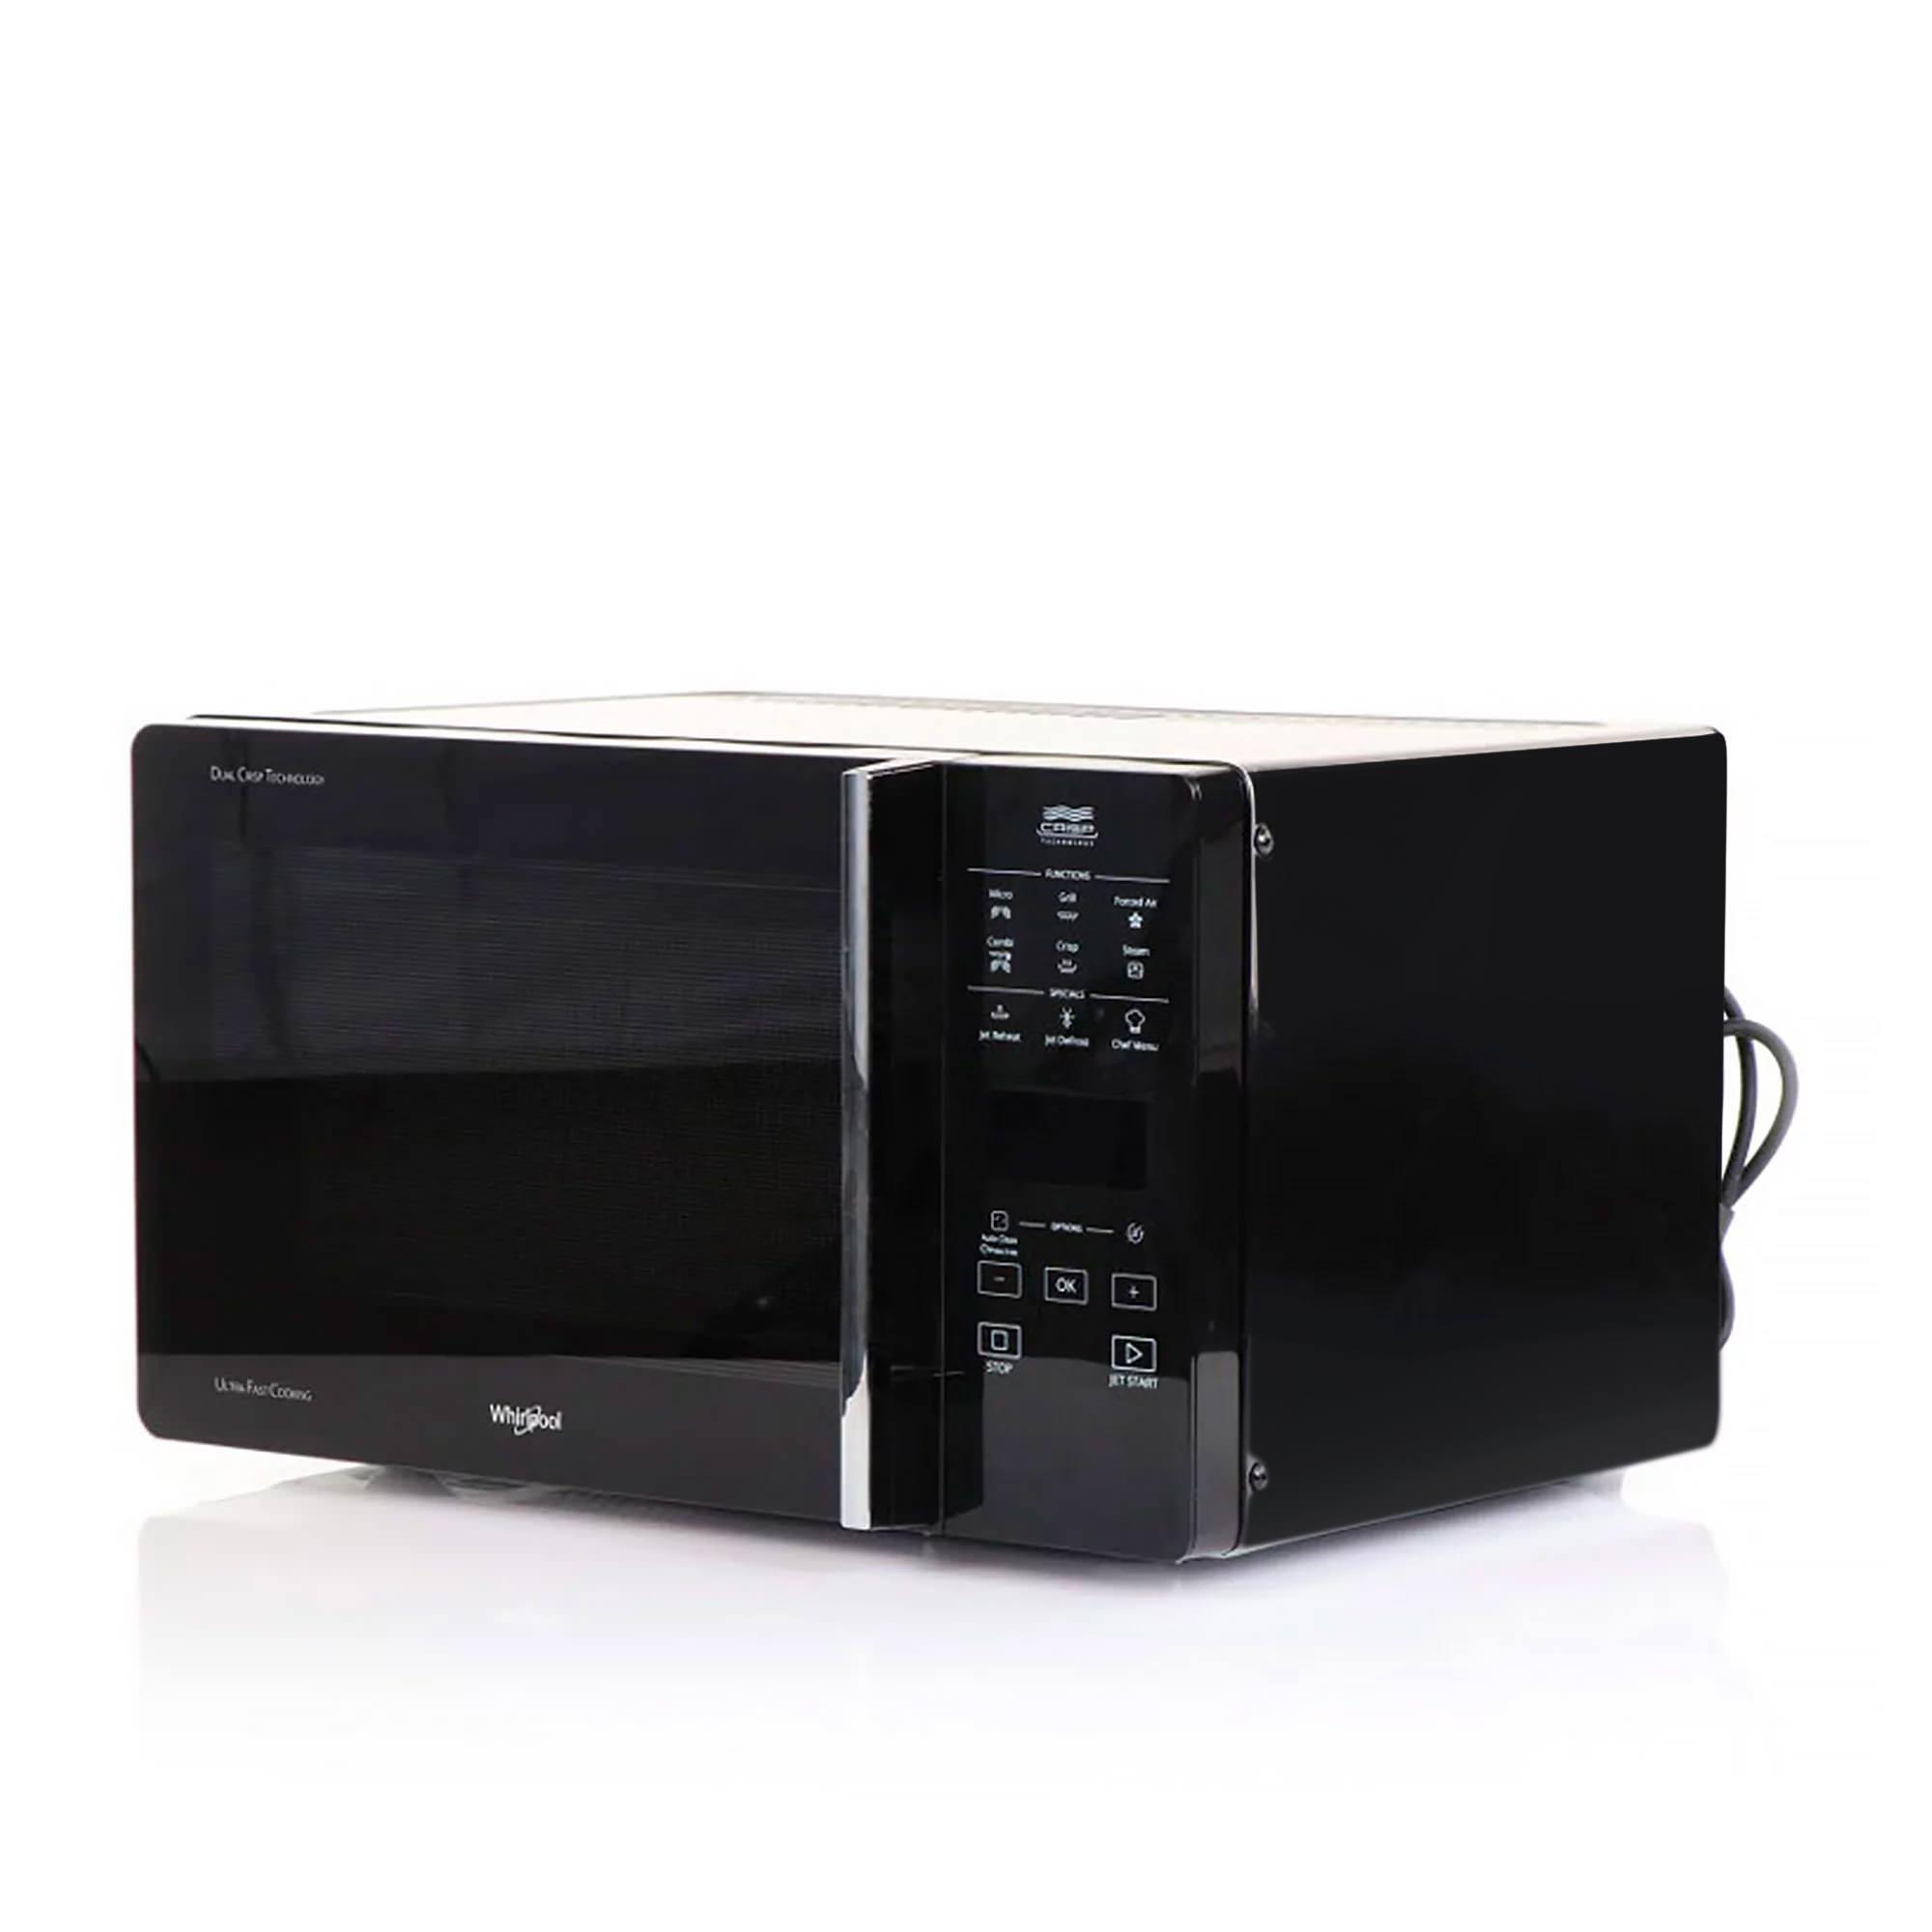 Whirlpool CrispFry Microwave Oven 25L Black Image 3